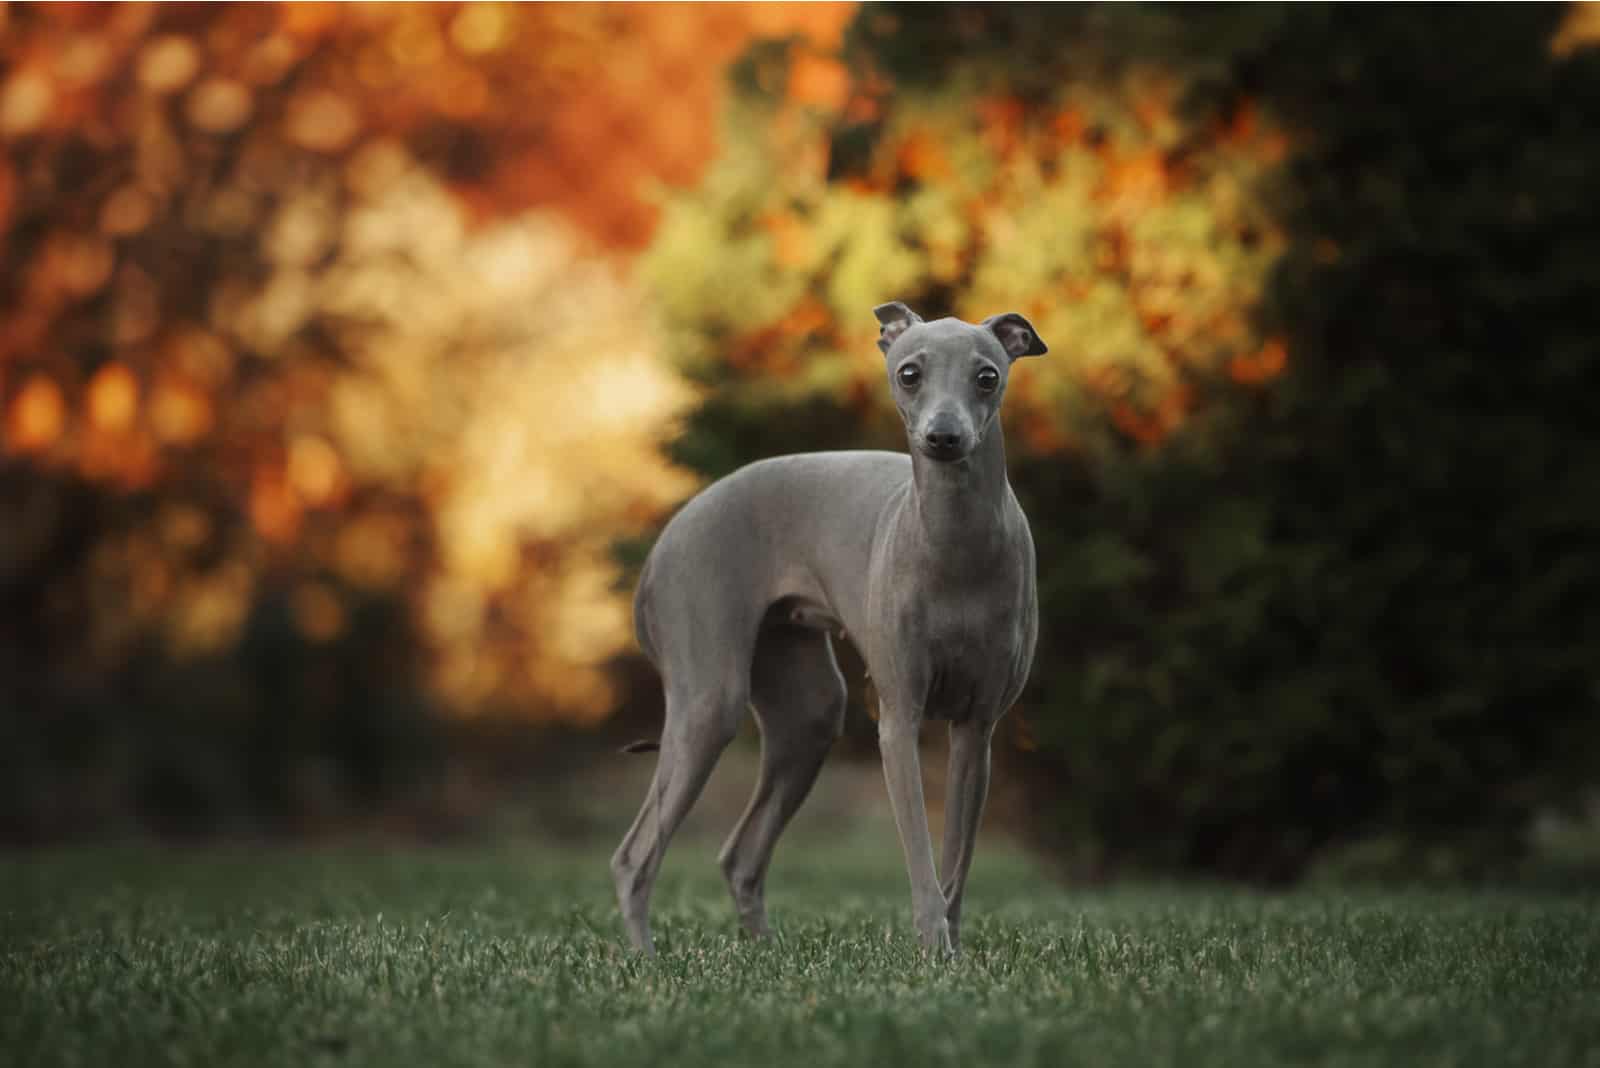 Greyhound standing on grass